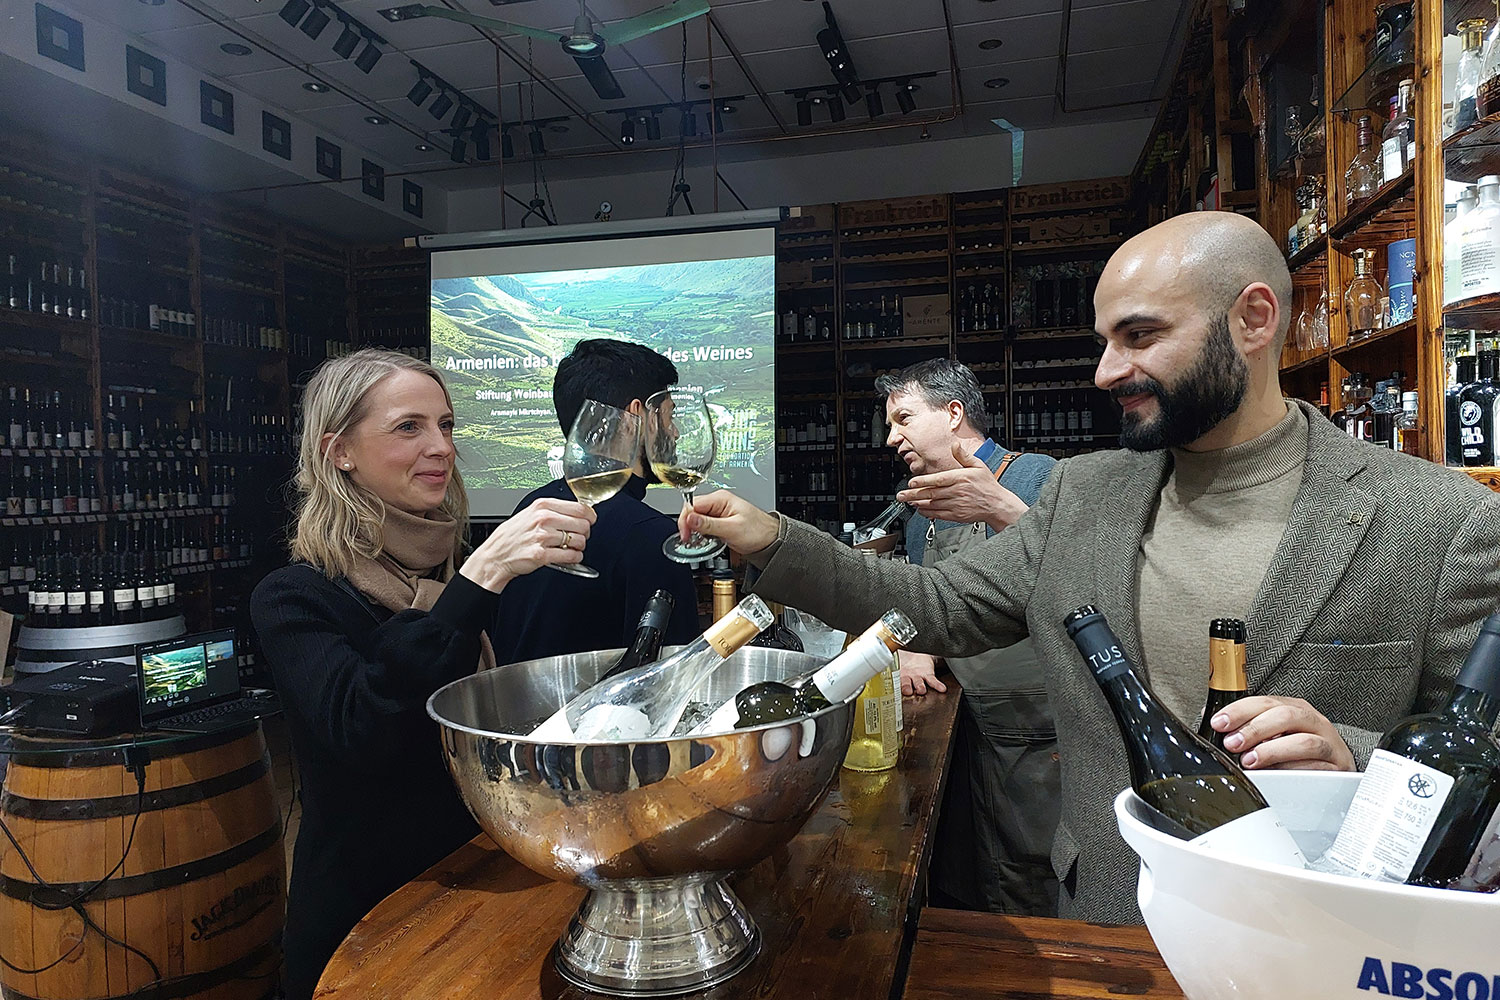 Armenian Wine Culture Days Held in Germany